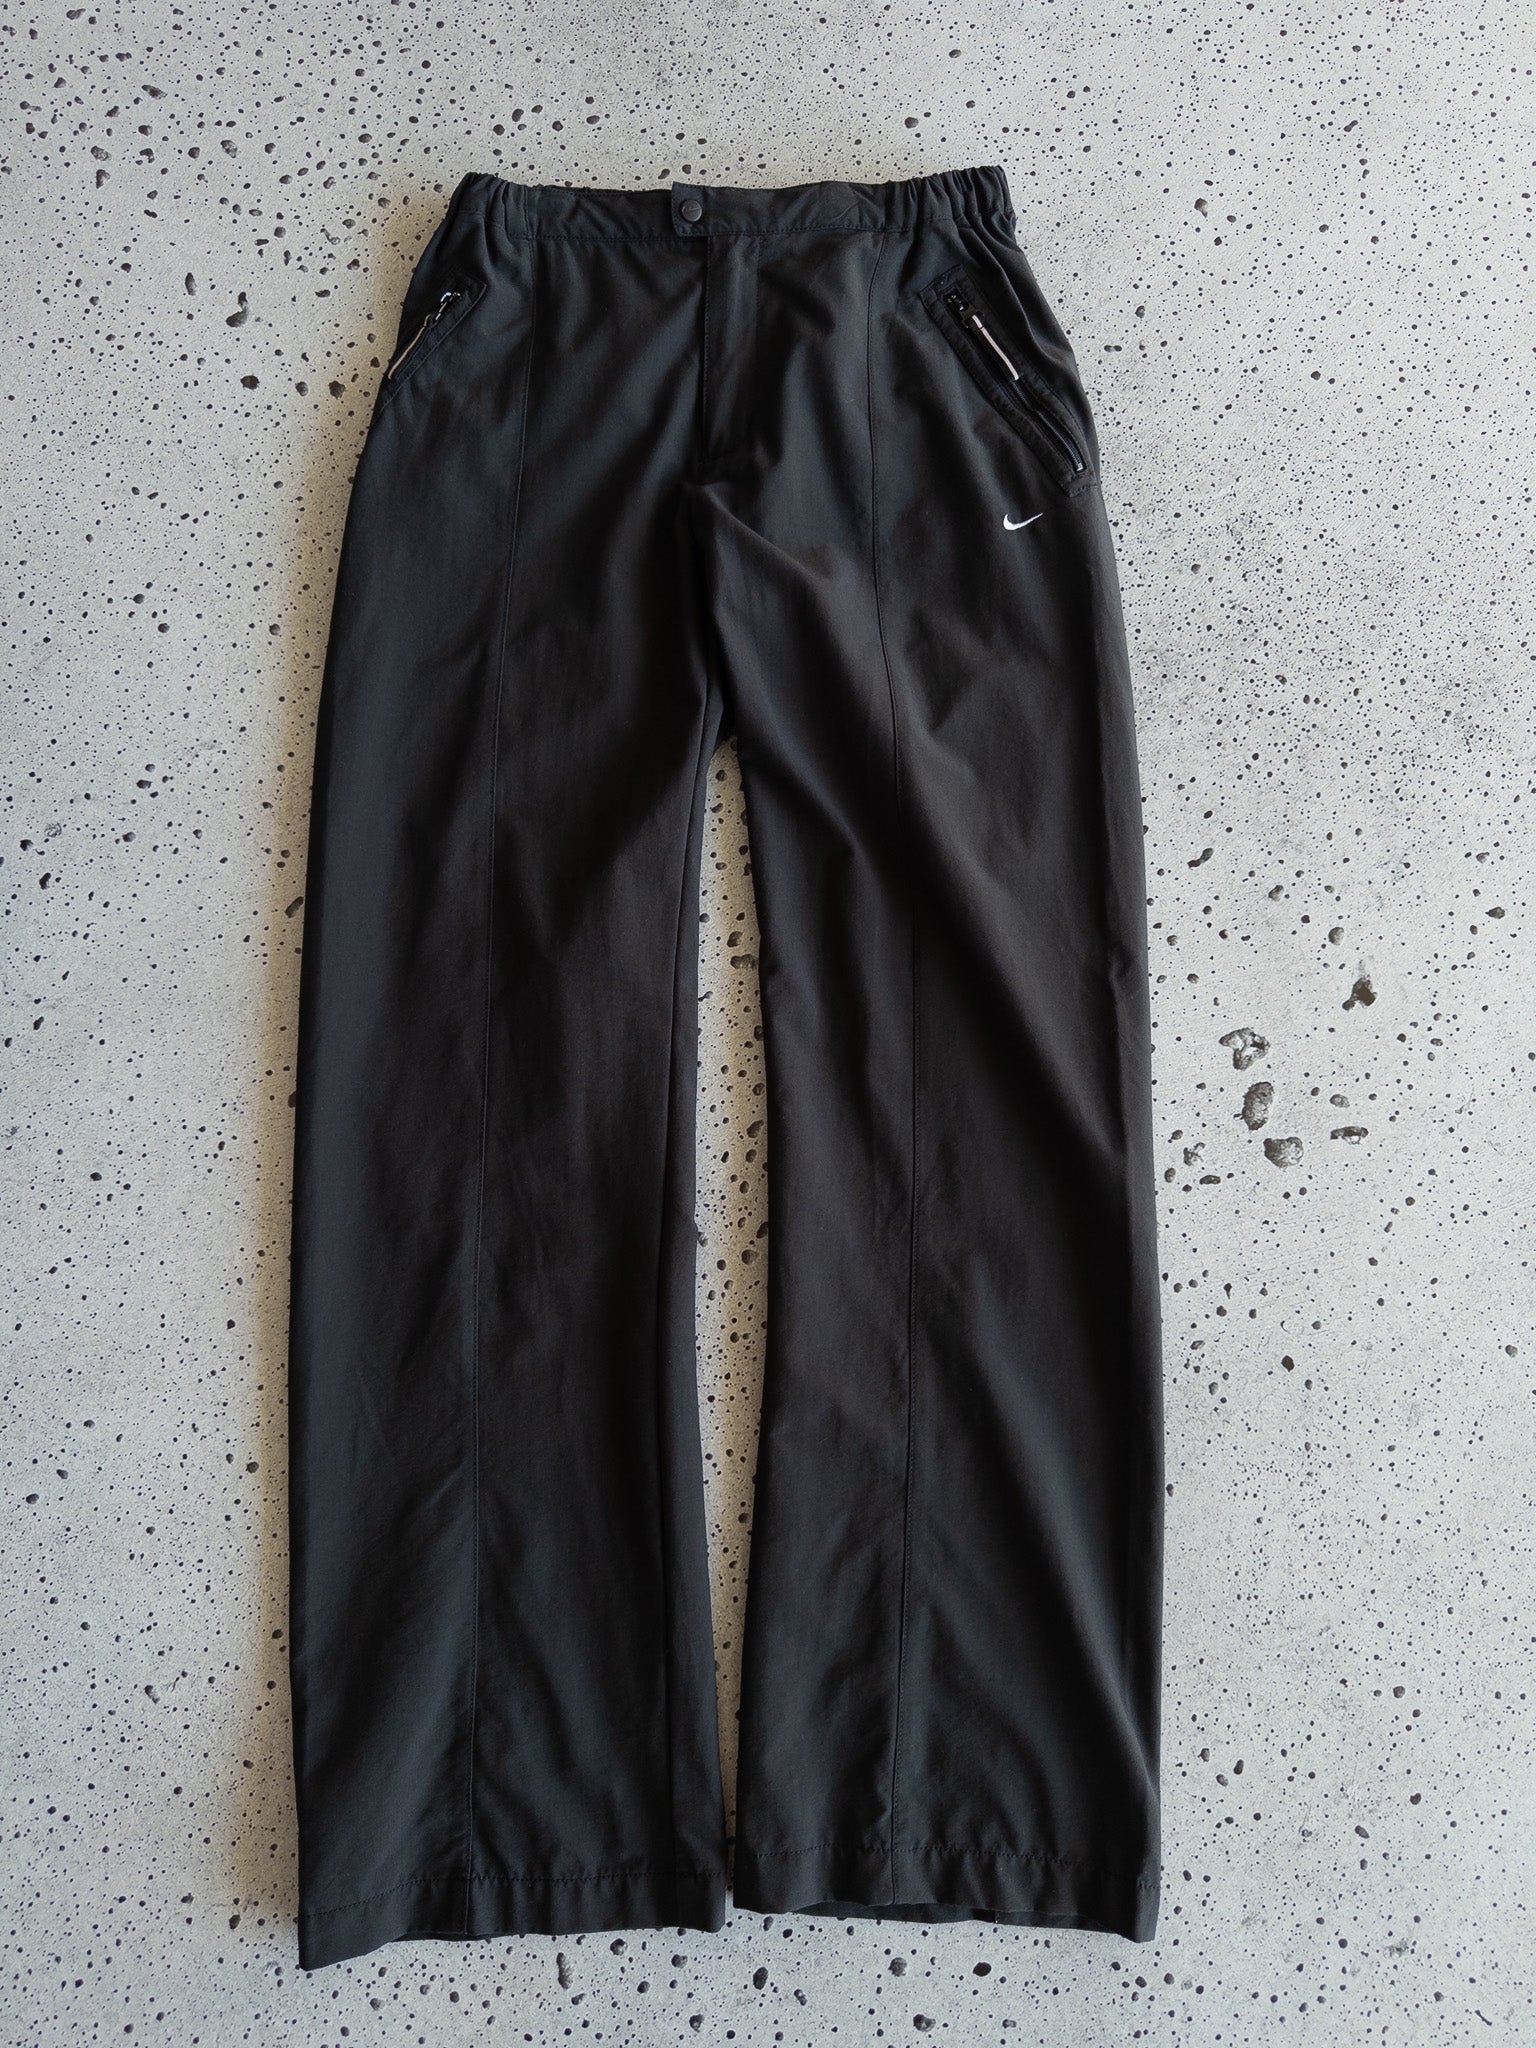 Vintage Nike Track Pants (XS)